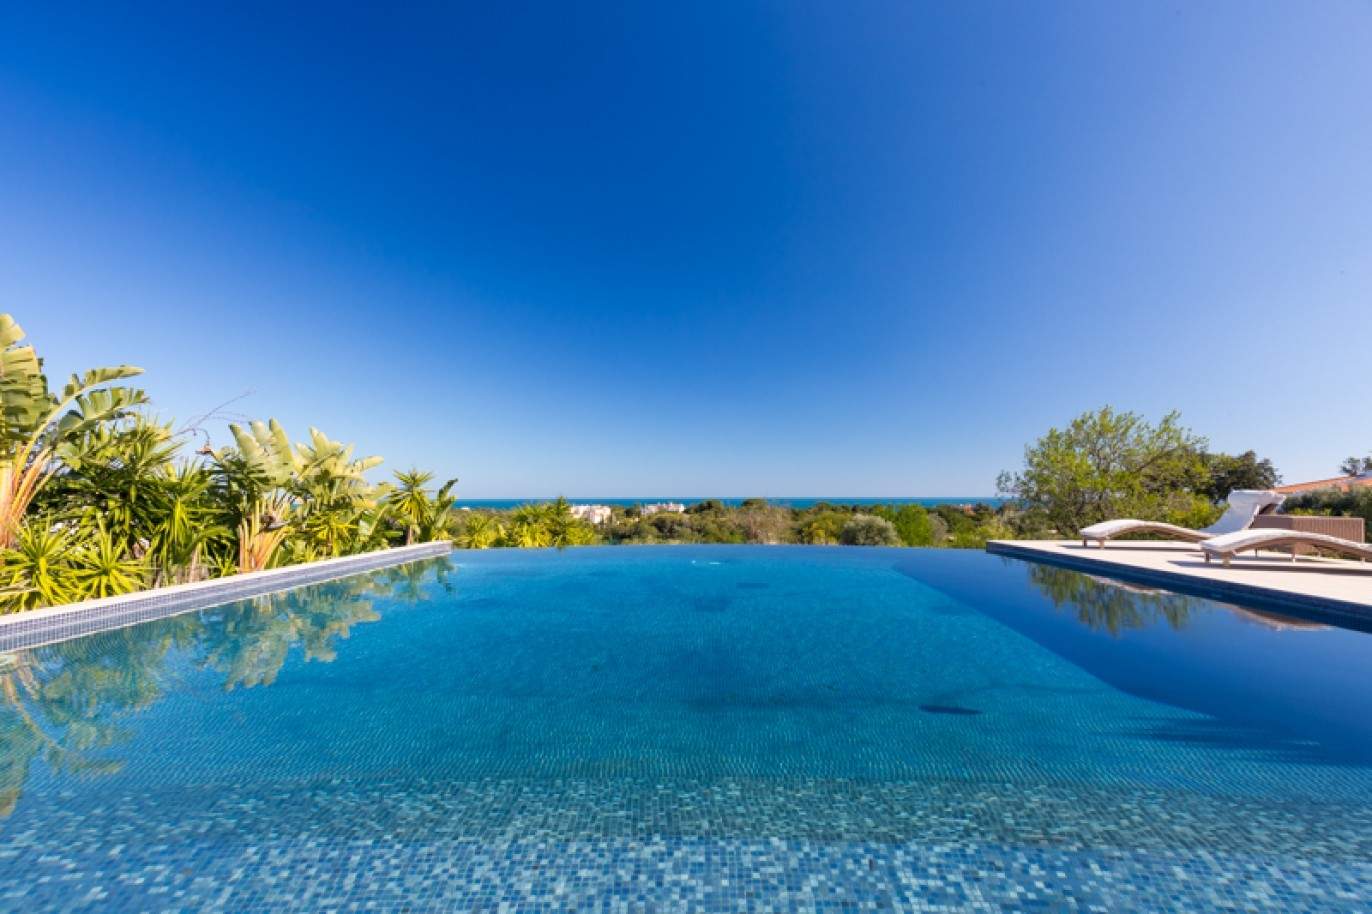 Villa for sale, with sea view, near beach and golf, Algarve, Portugal_76406